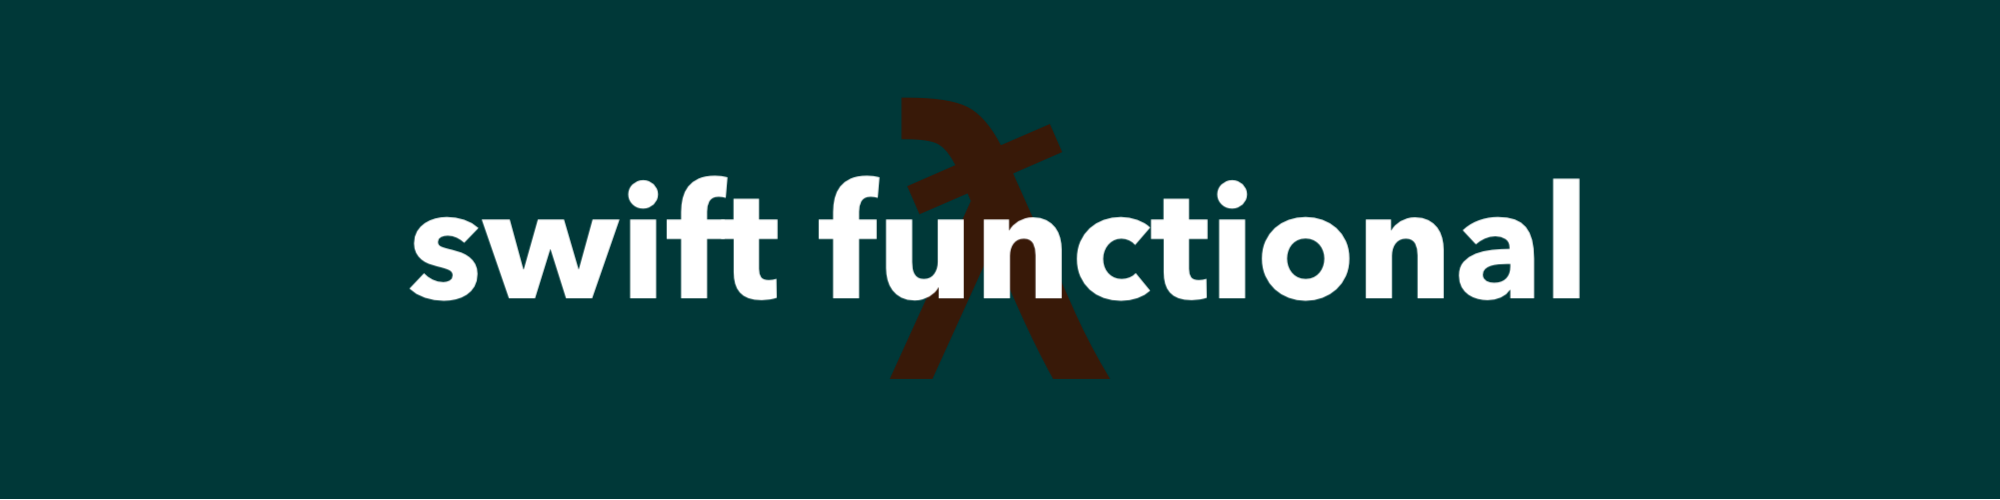 logo-swift_functional.png